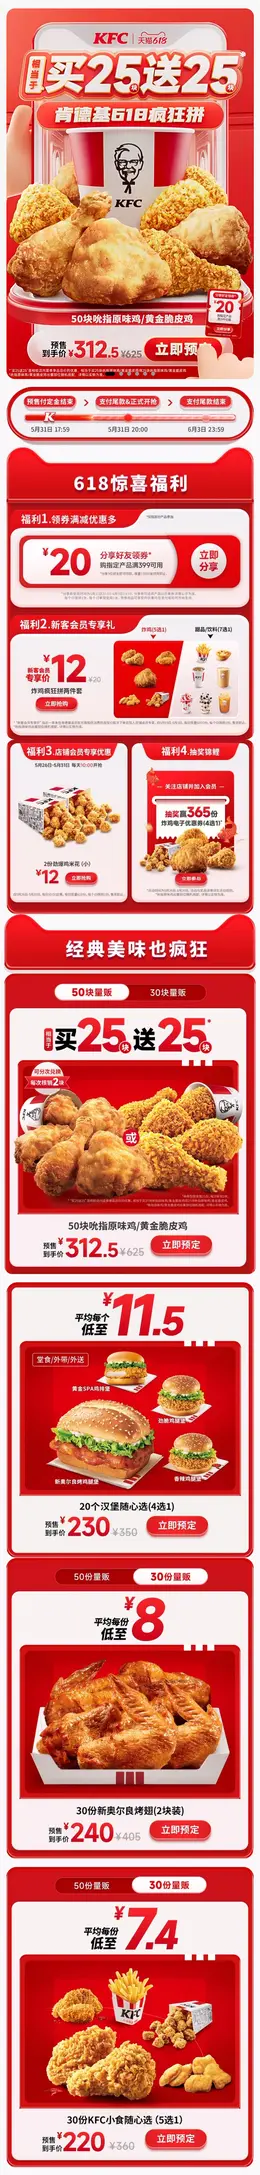 KFC肯德基 快餐食品 618预售 618狂欢活动首页设计